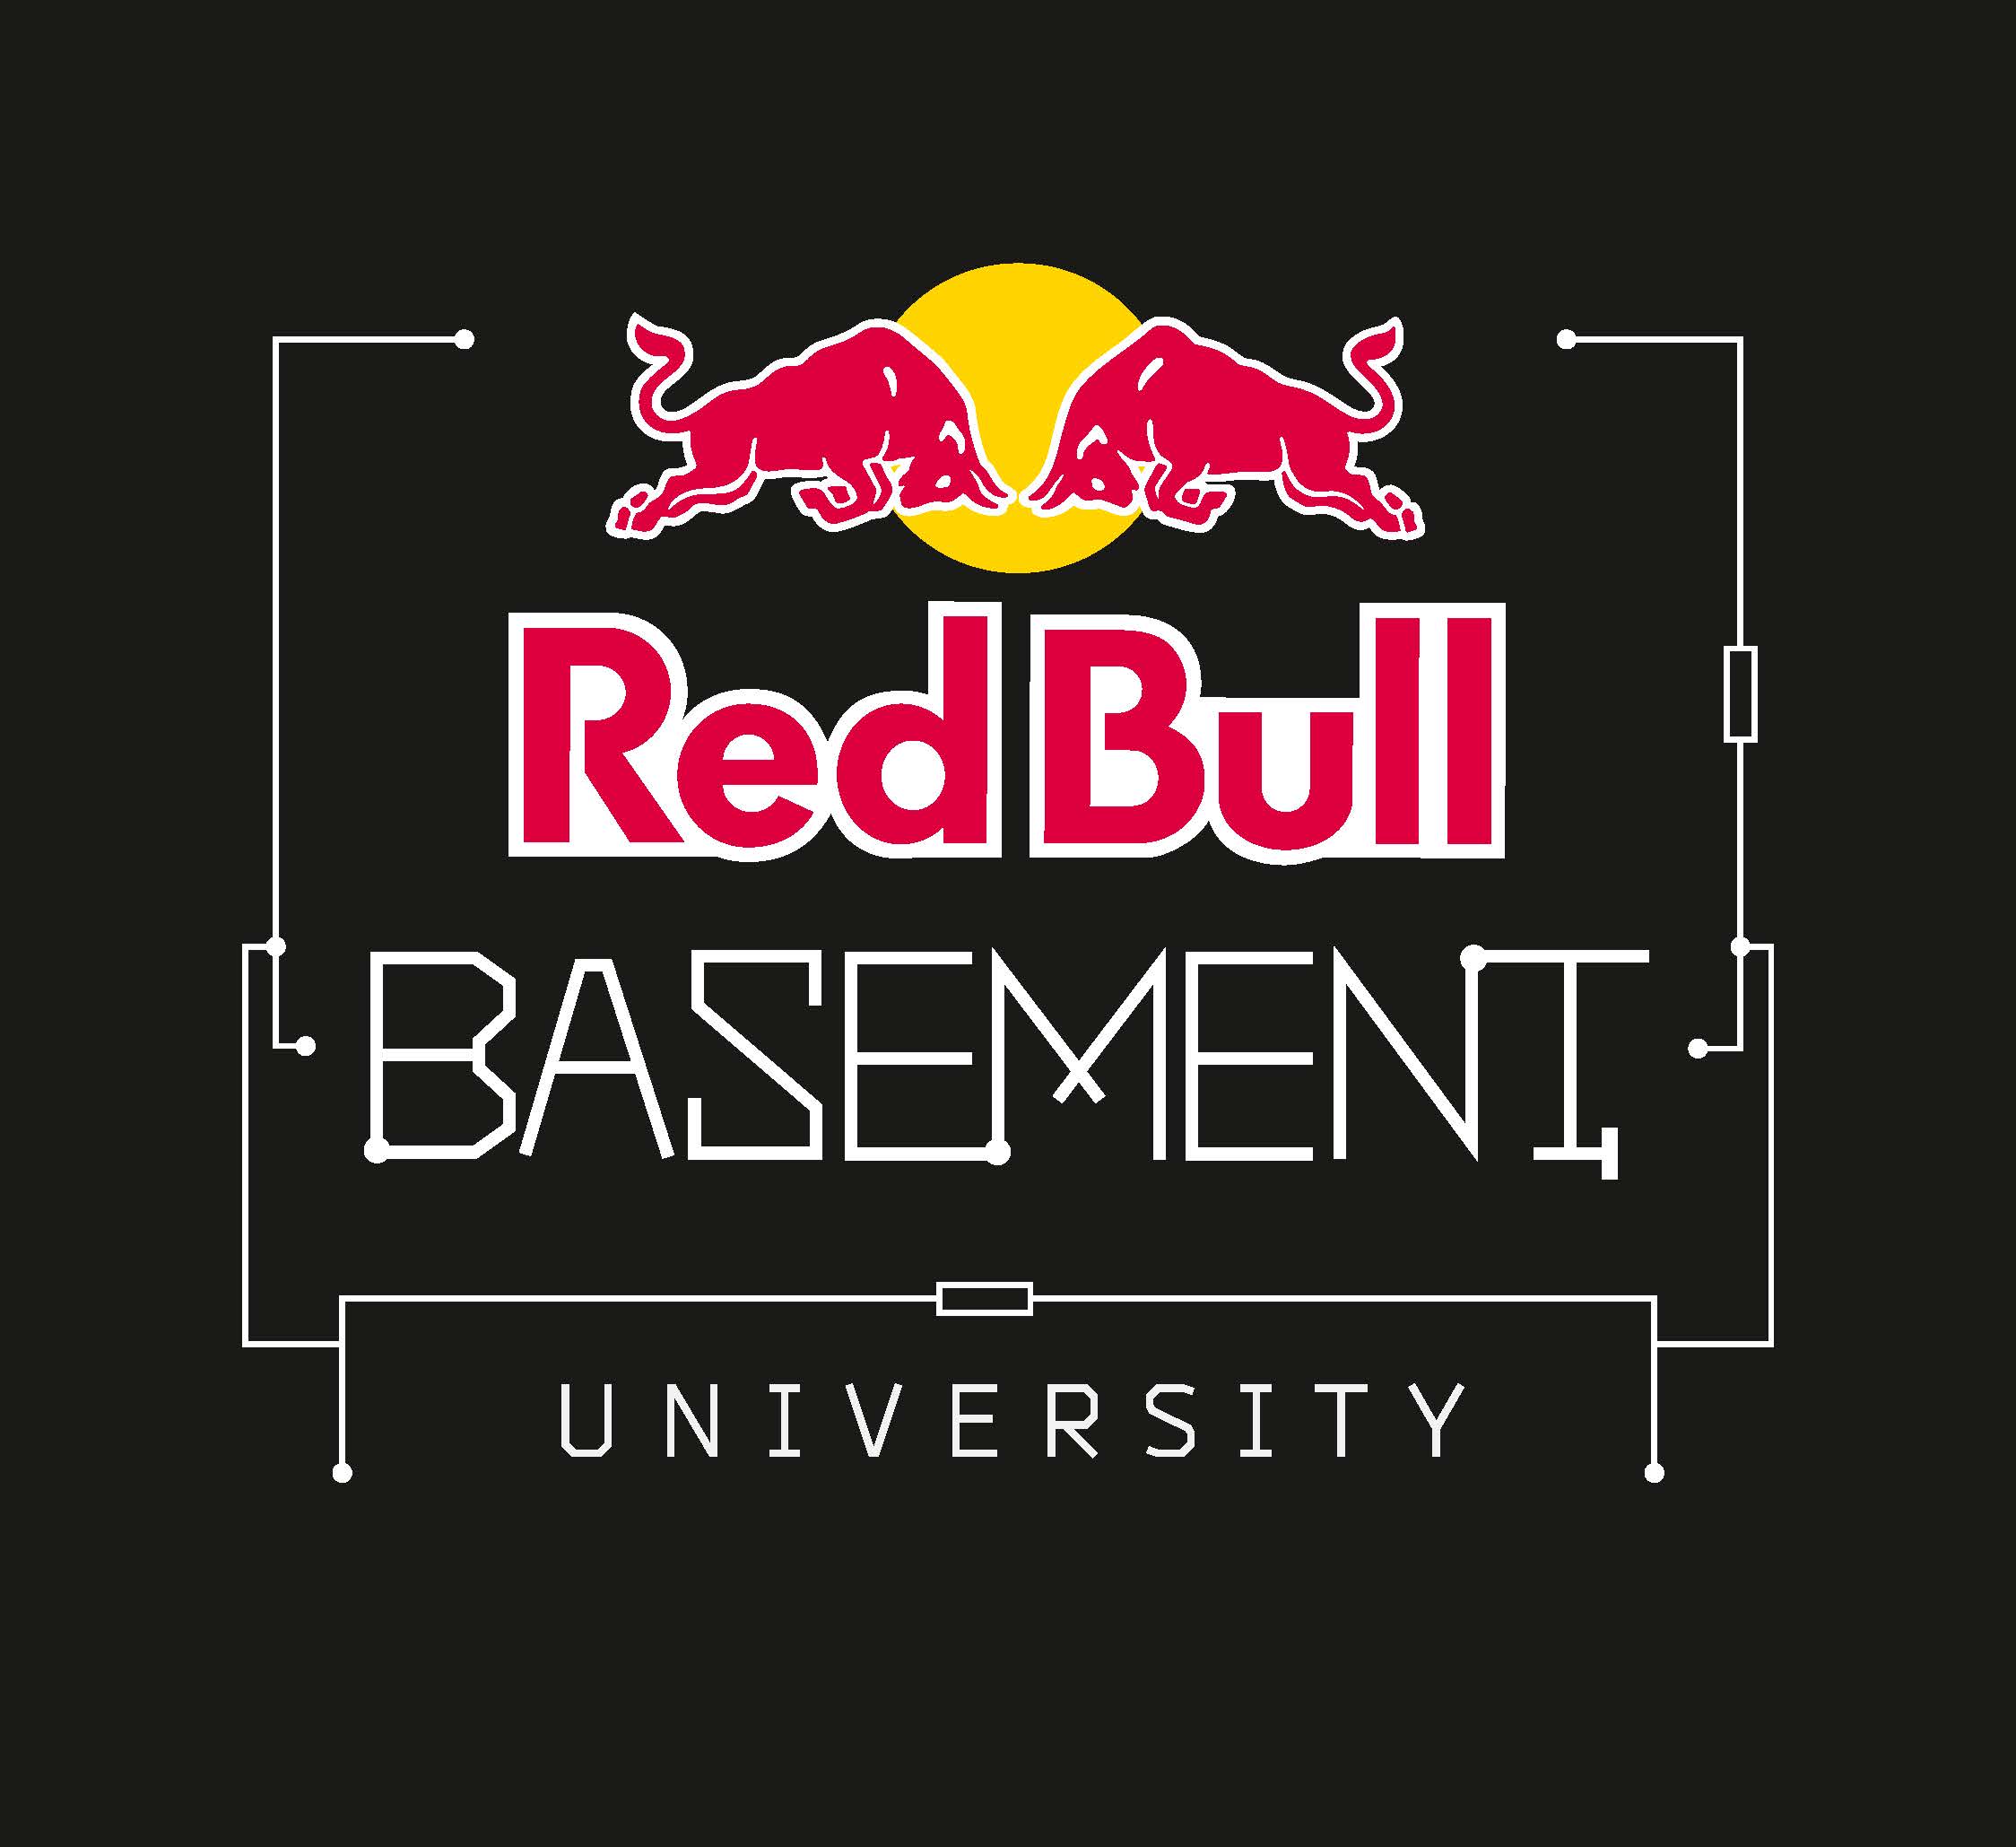 Makuake が日本初開催となるレッドブル主催のキャンパス イノベーター育成プログラム Red Bull Basement University に特別審査員として参加決定 株式会社マクアケのプレスリリース